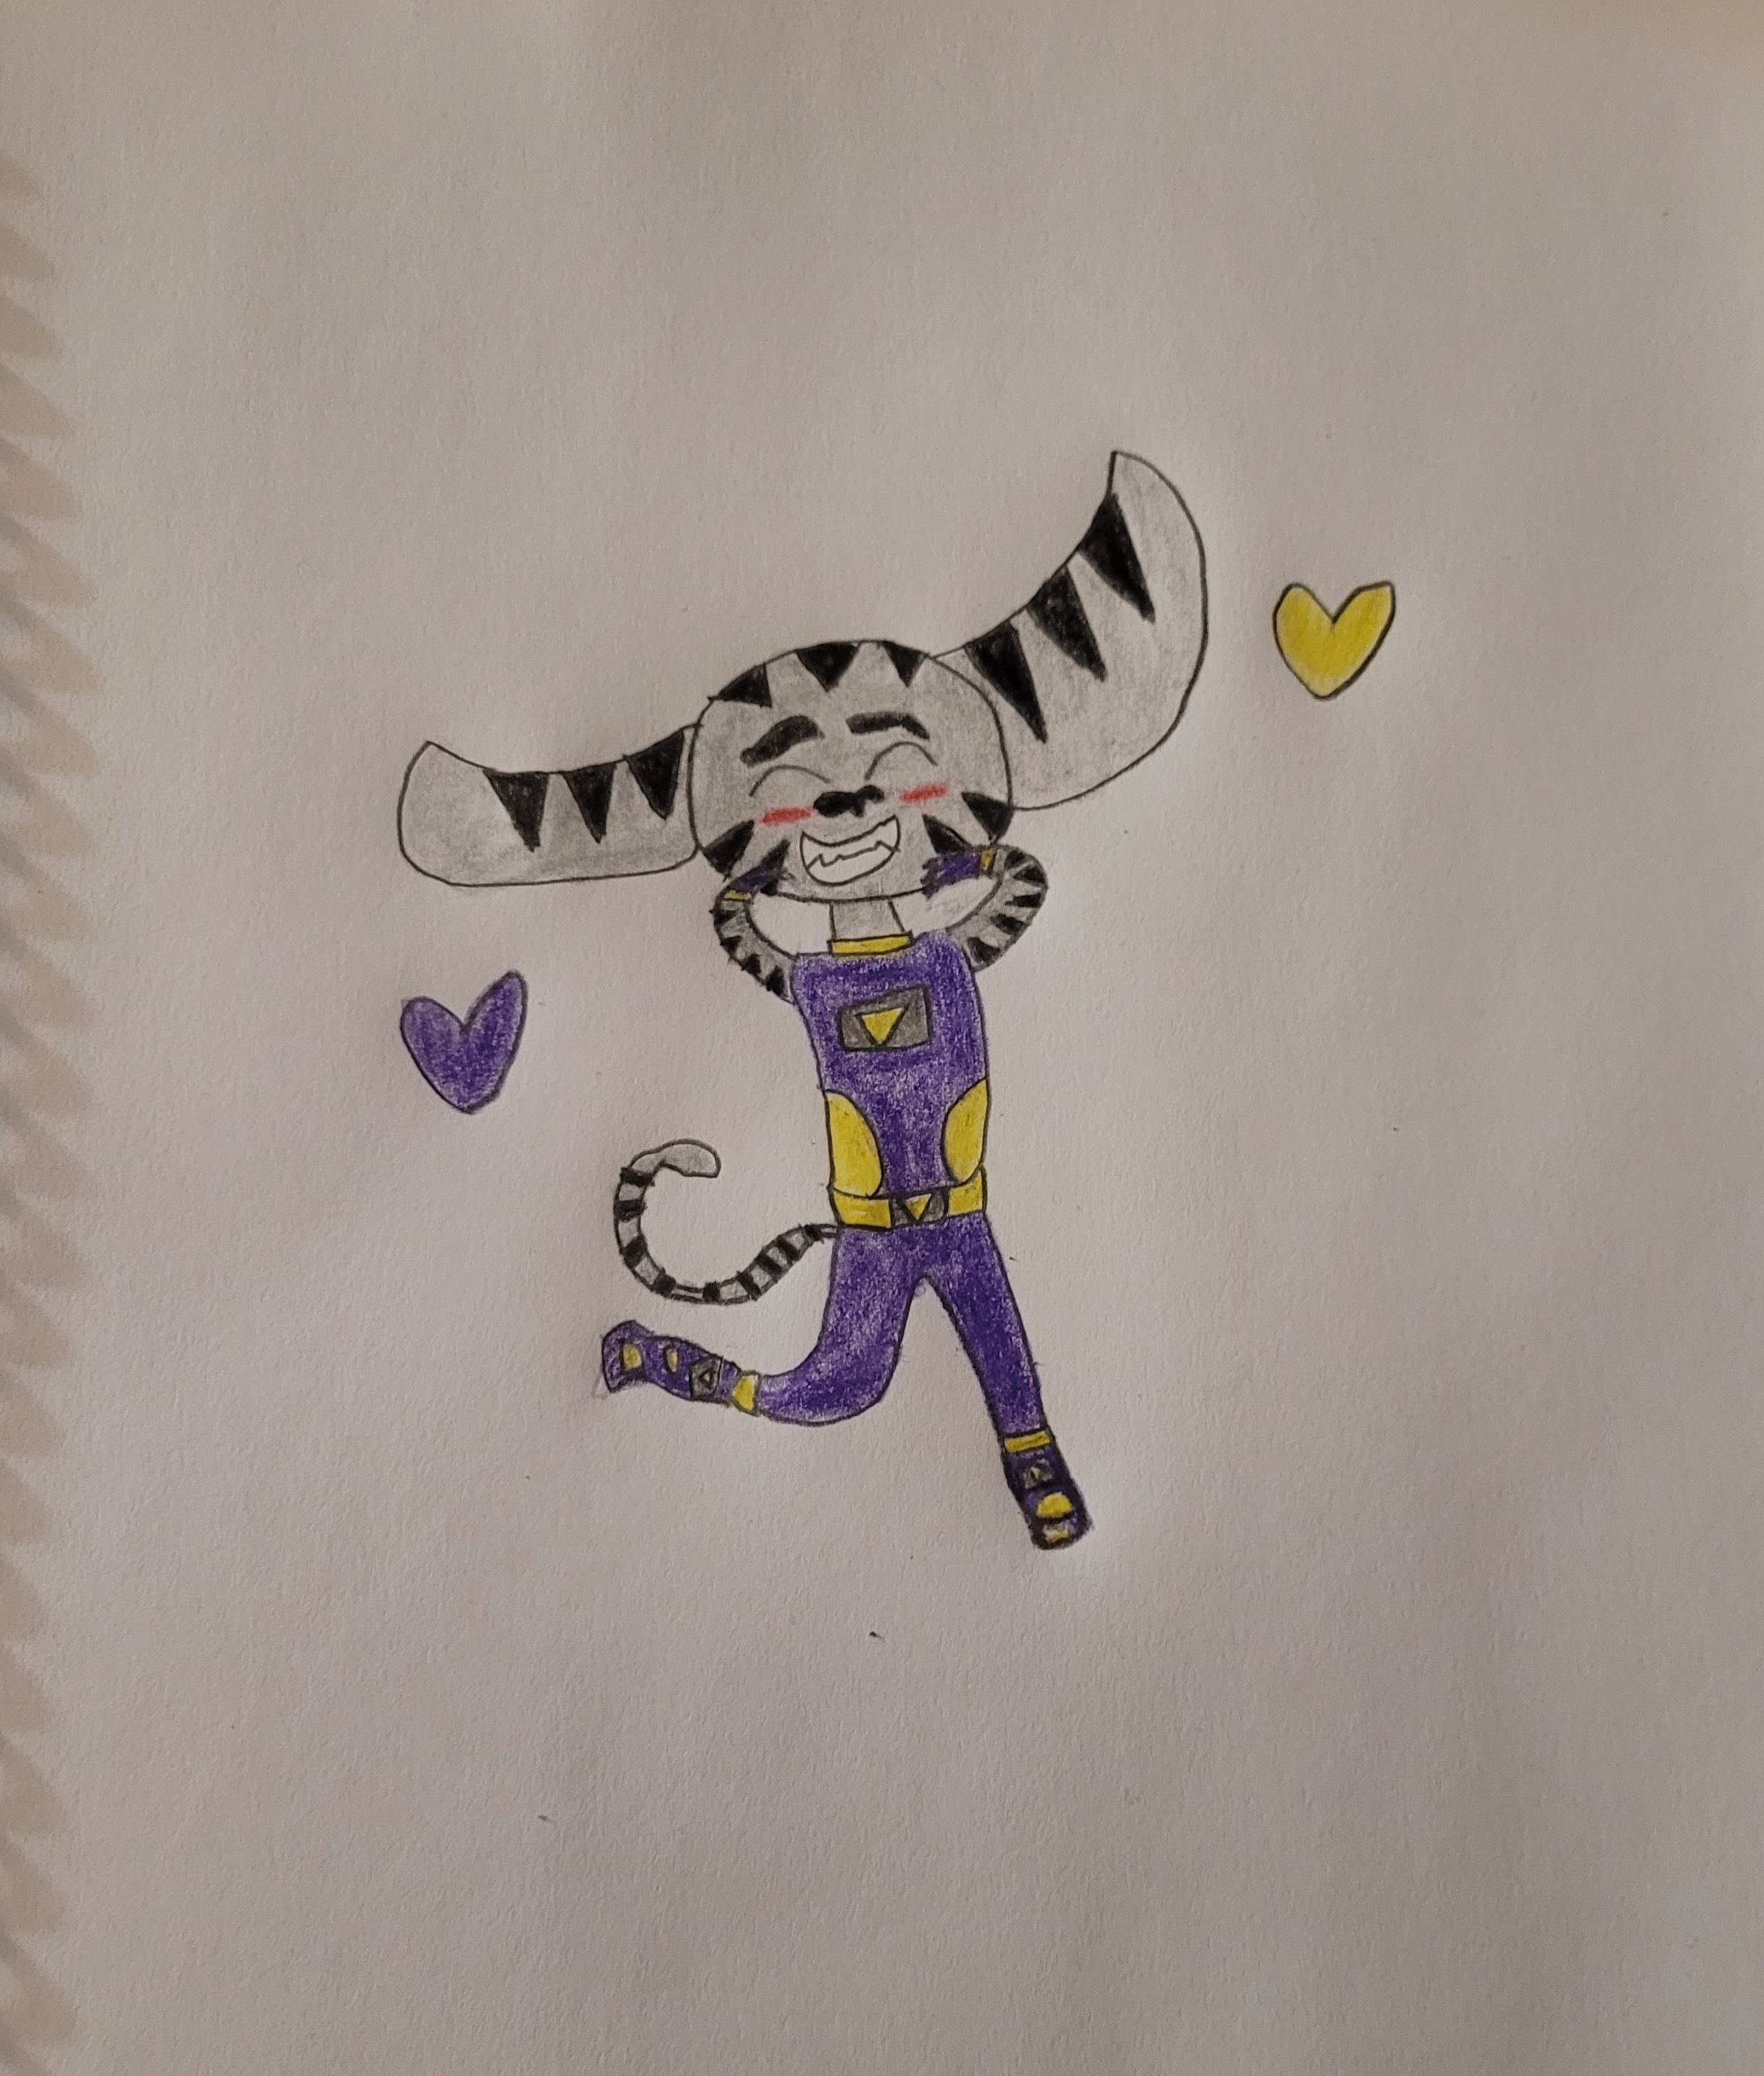 My cute drawing of Purple